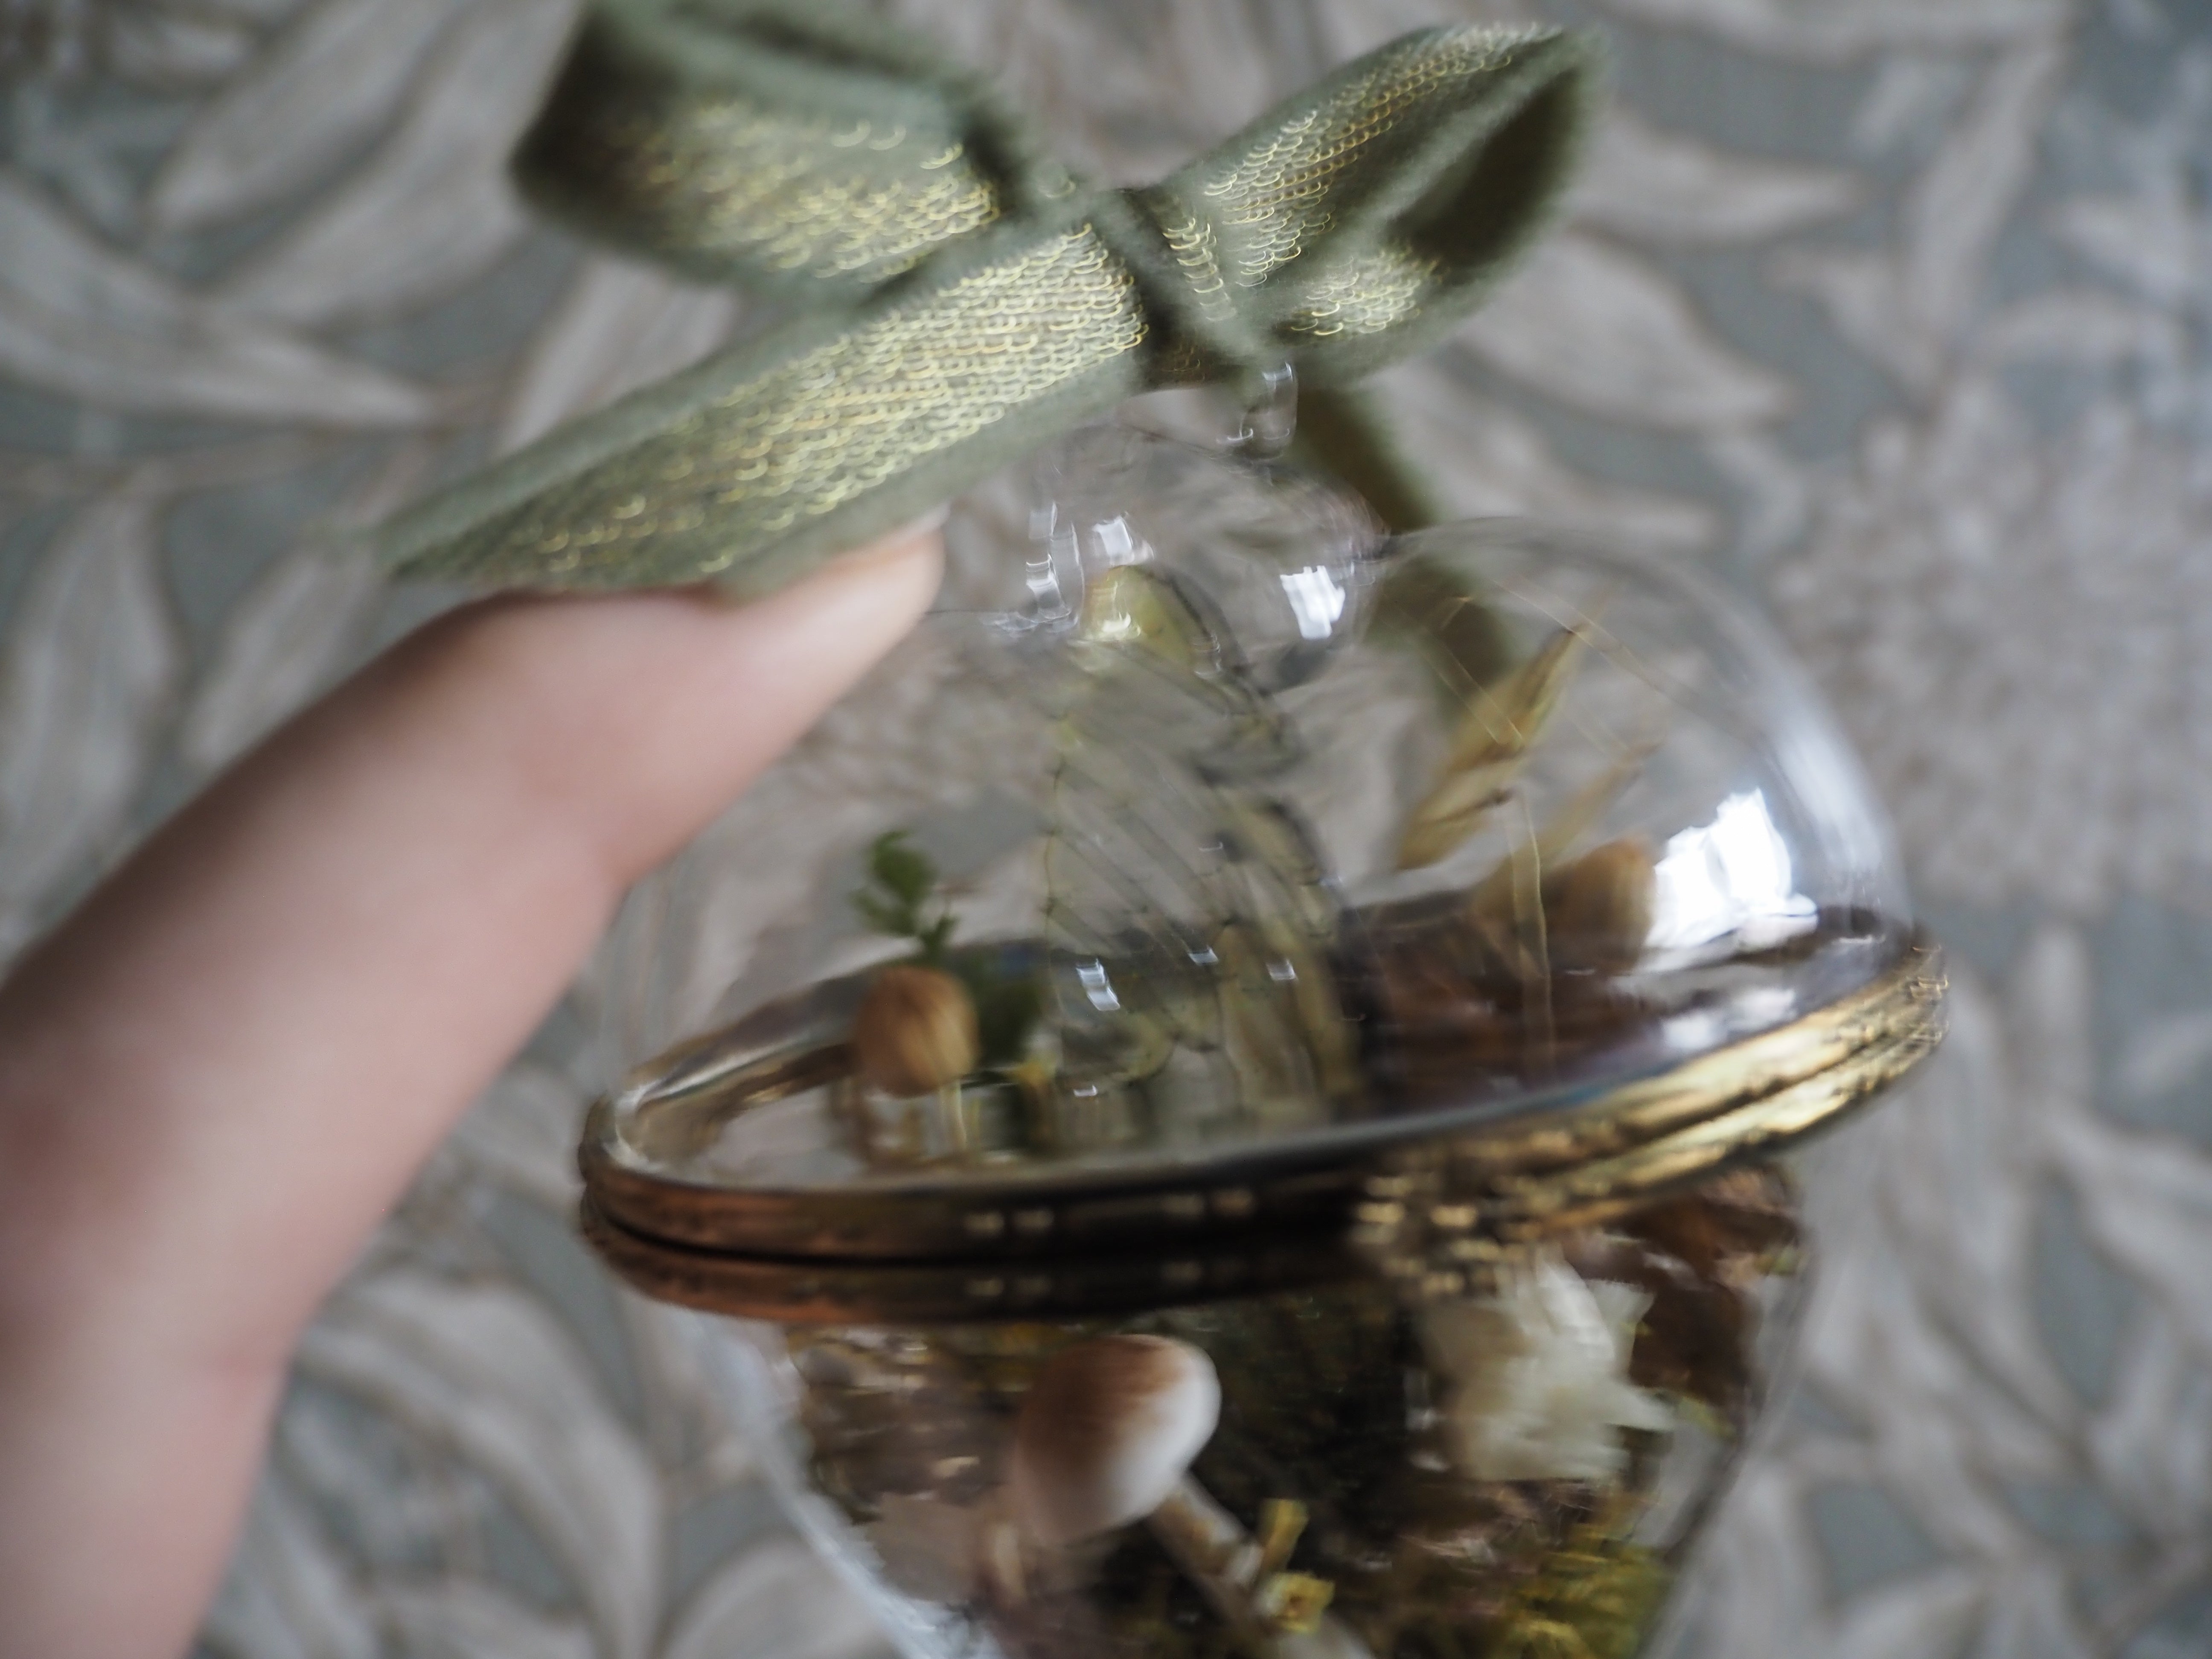 OOAK Cottagecore Fairy glass heart - nature